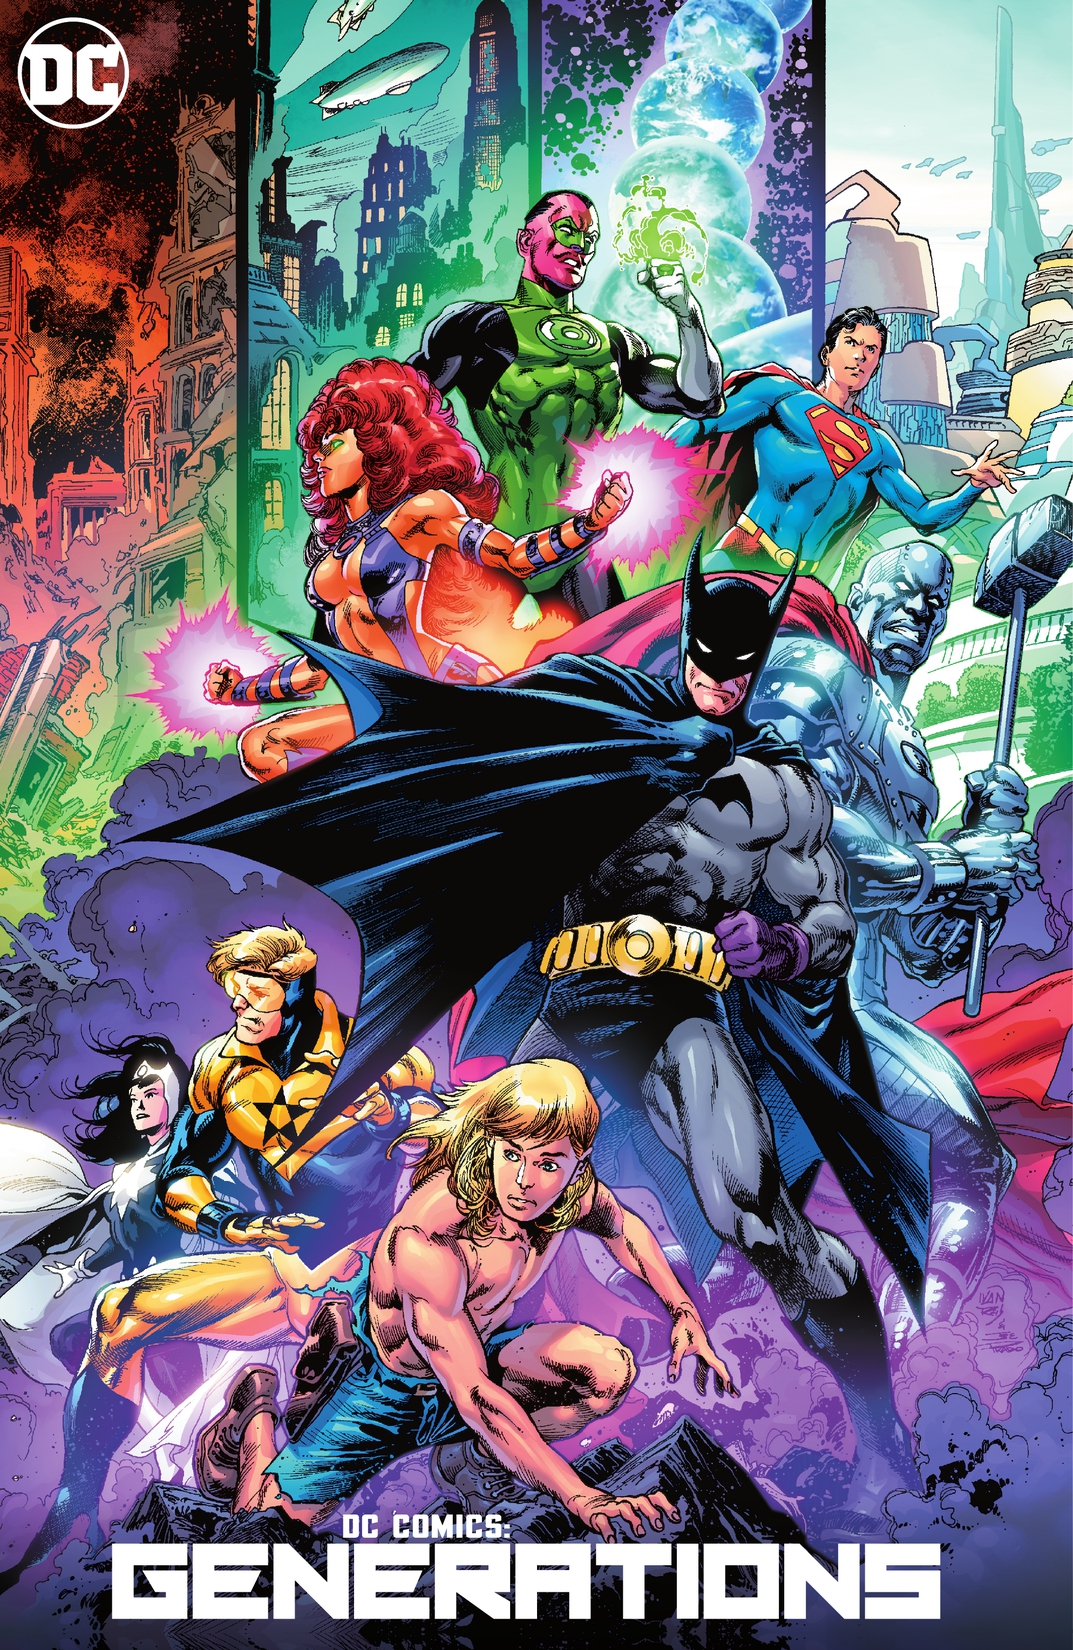 DC Comics: Generations preview images